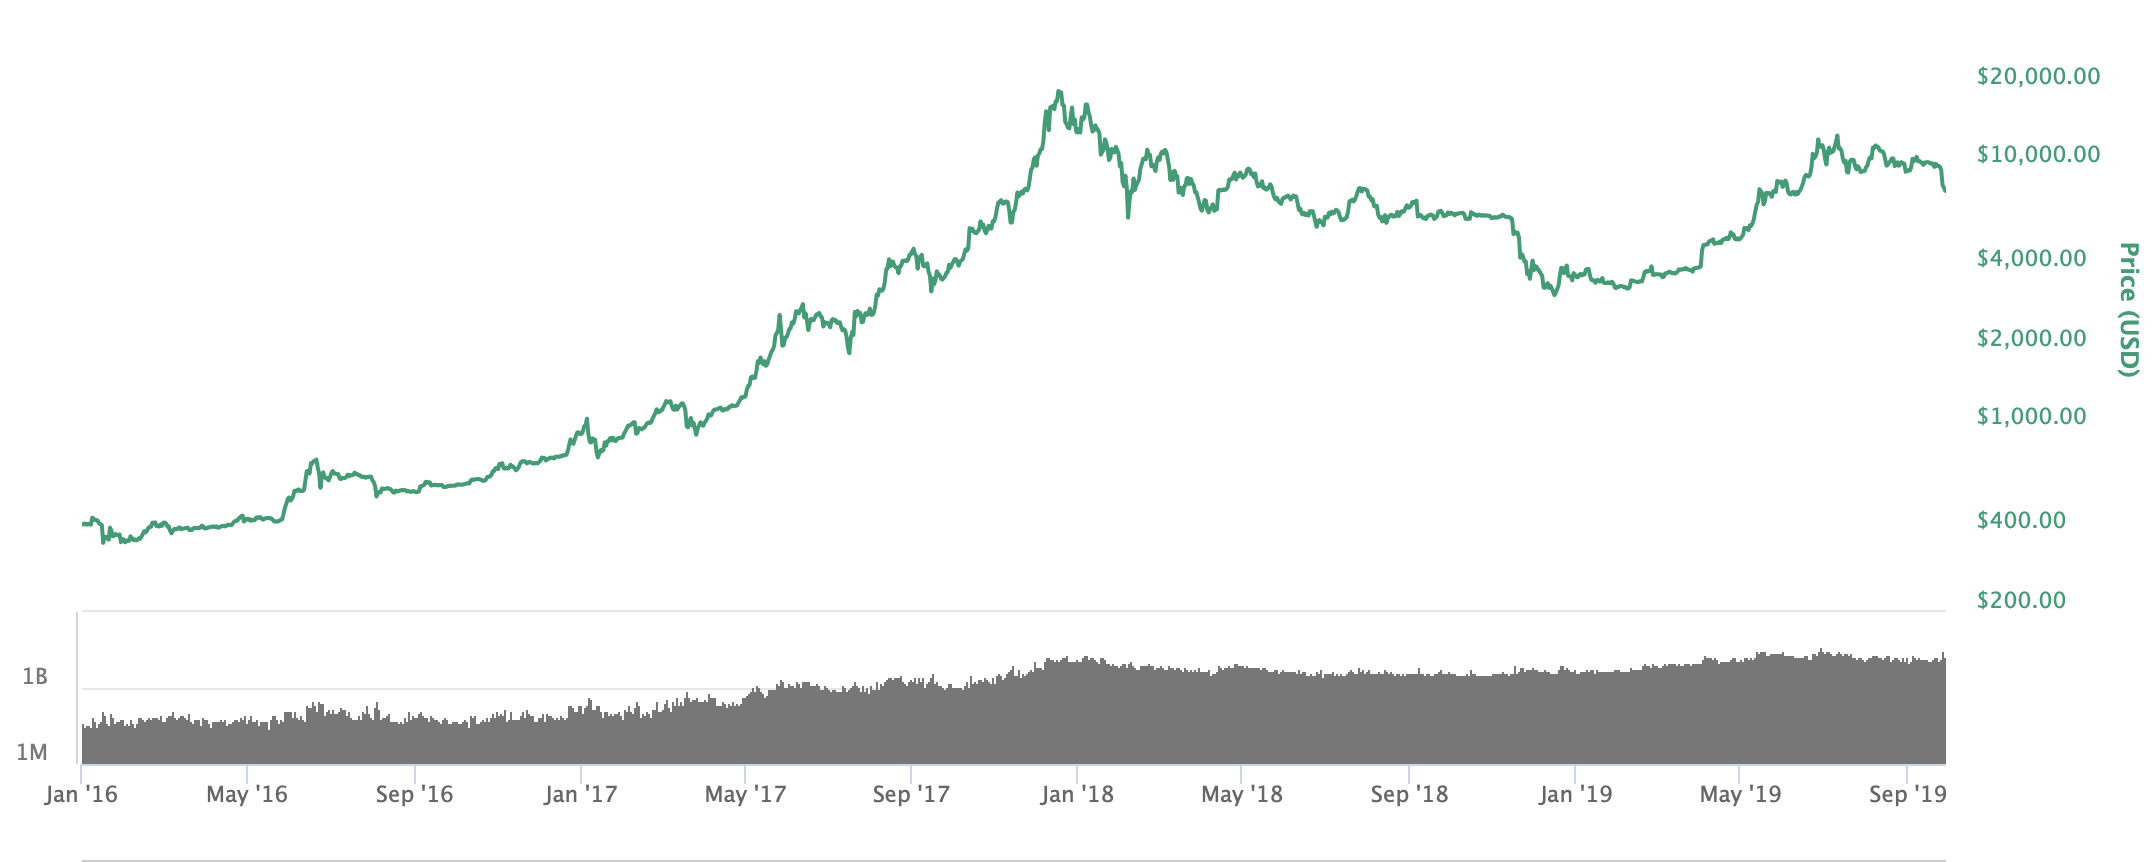 Bitcoin price market cycle